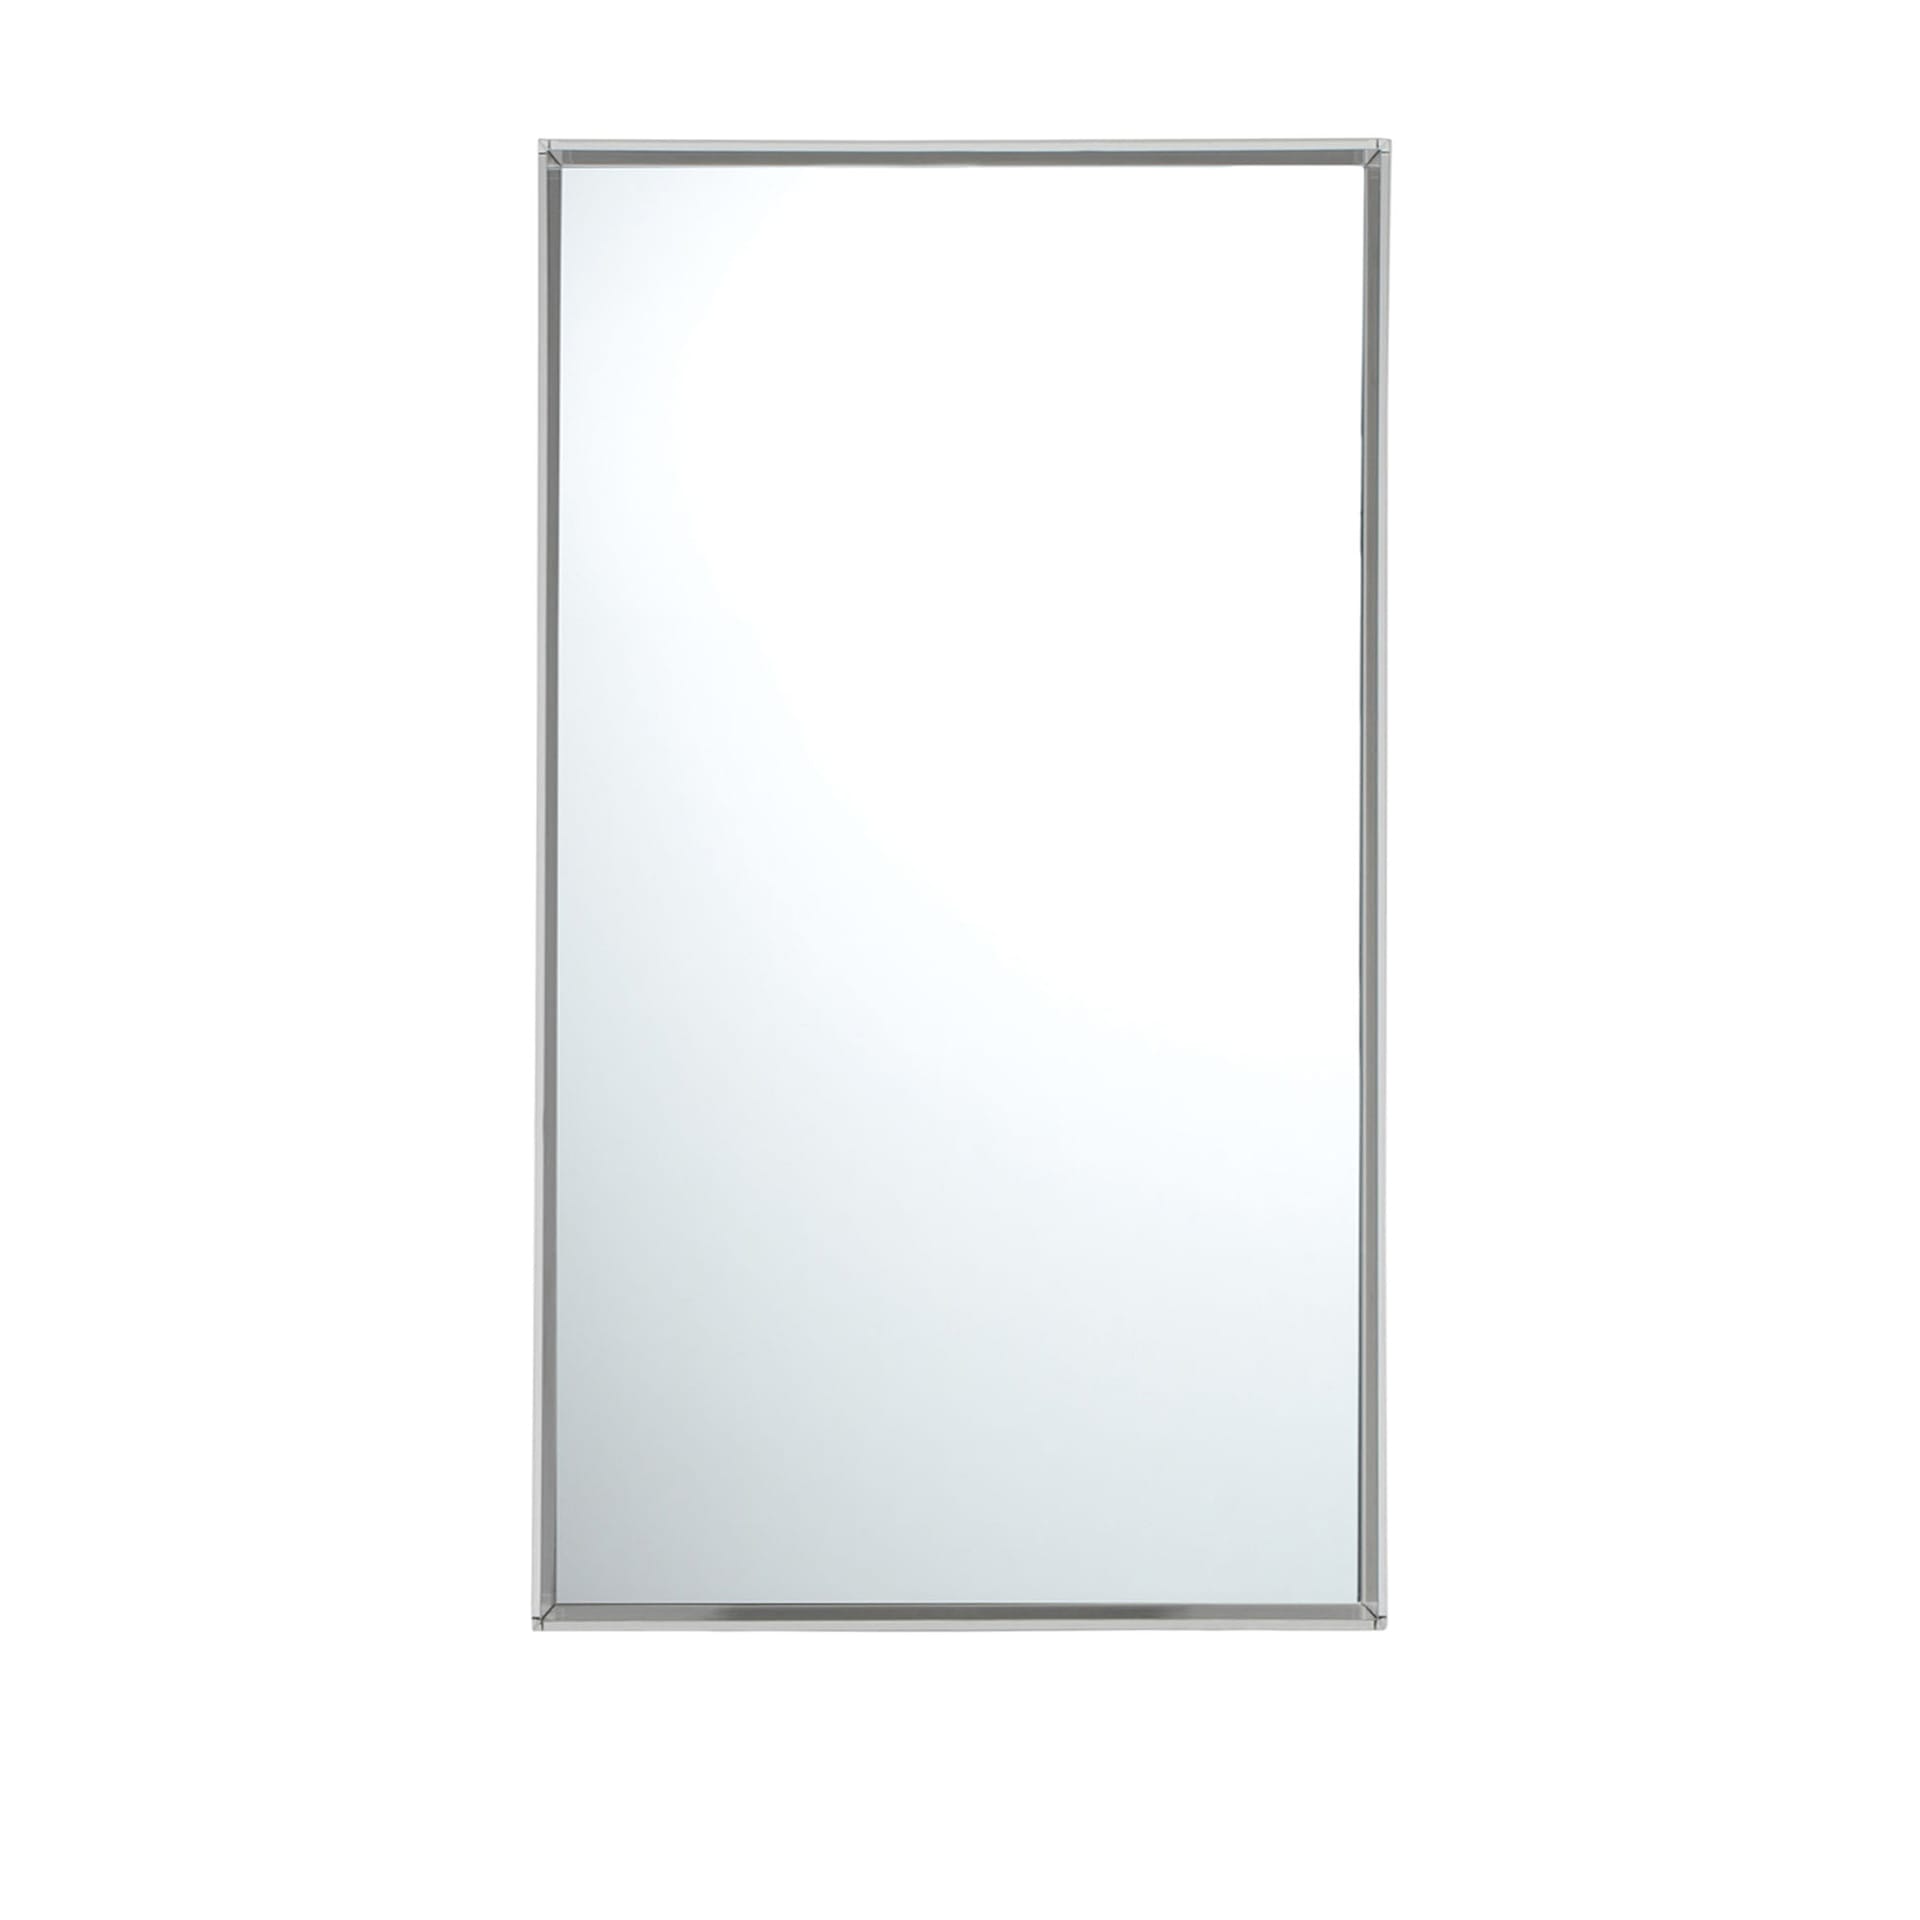 Only Me 80x180 Mirror - Kartell - Philippe Starck - NO GA